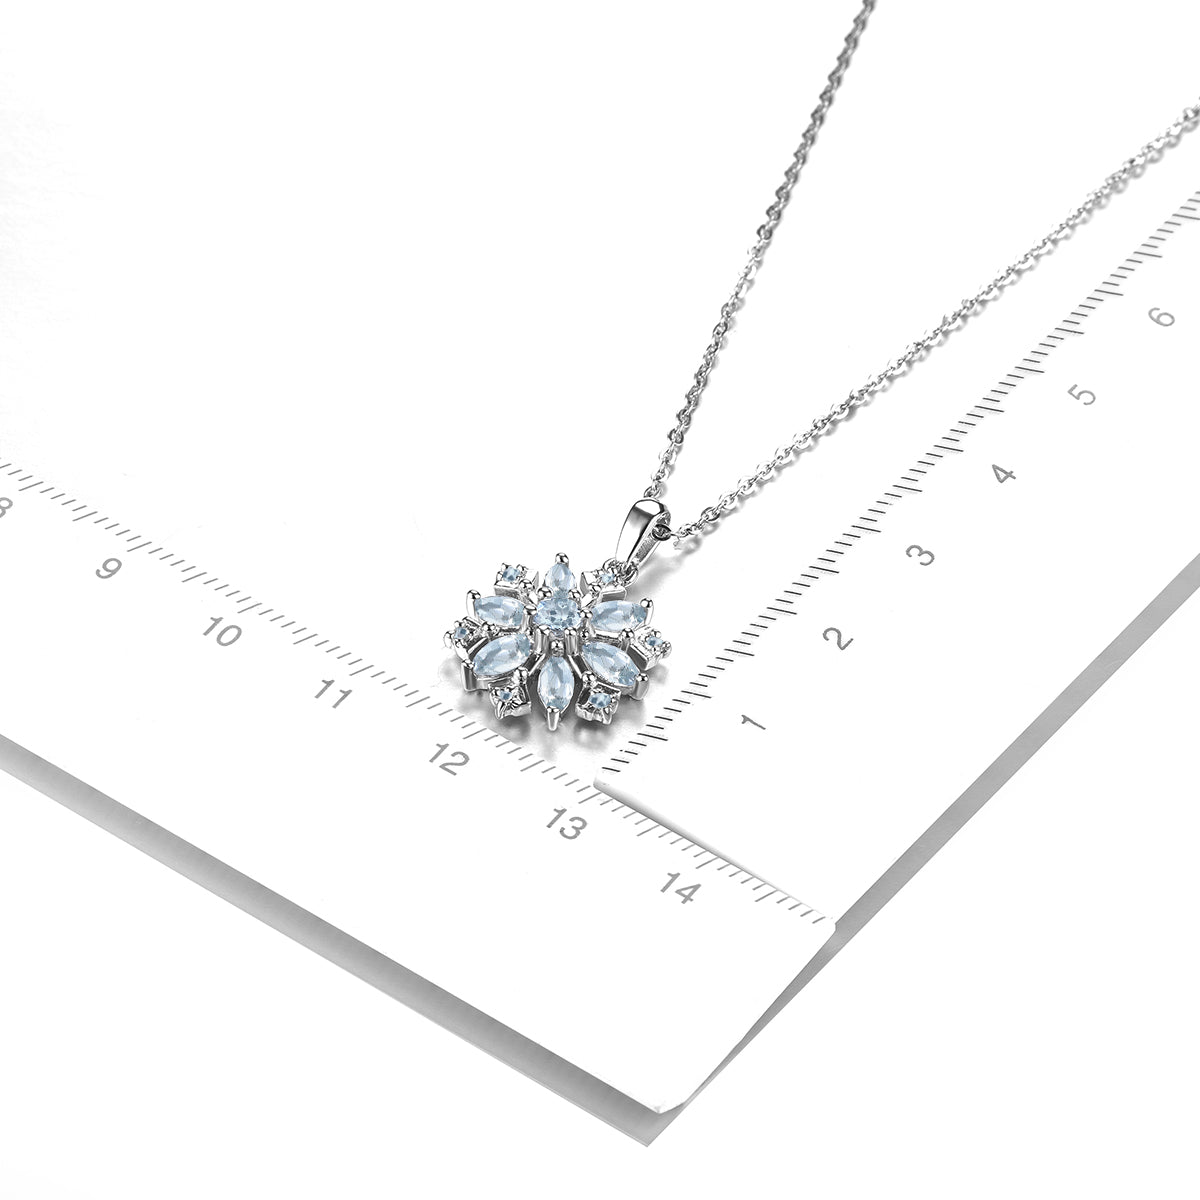 Aquamarine Stone Snow Necklace for Women